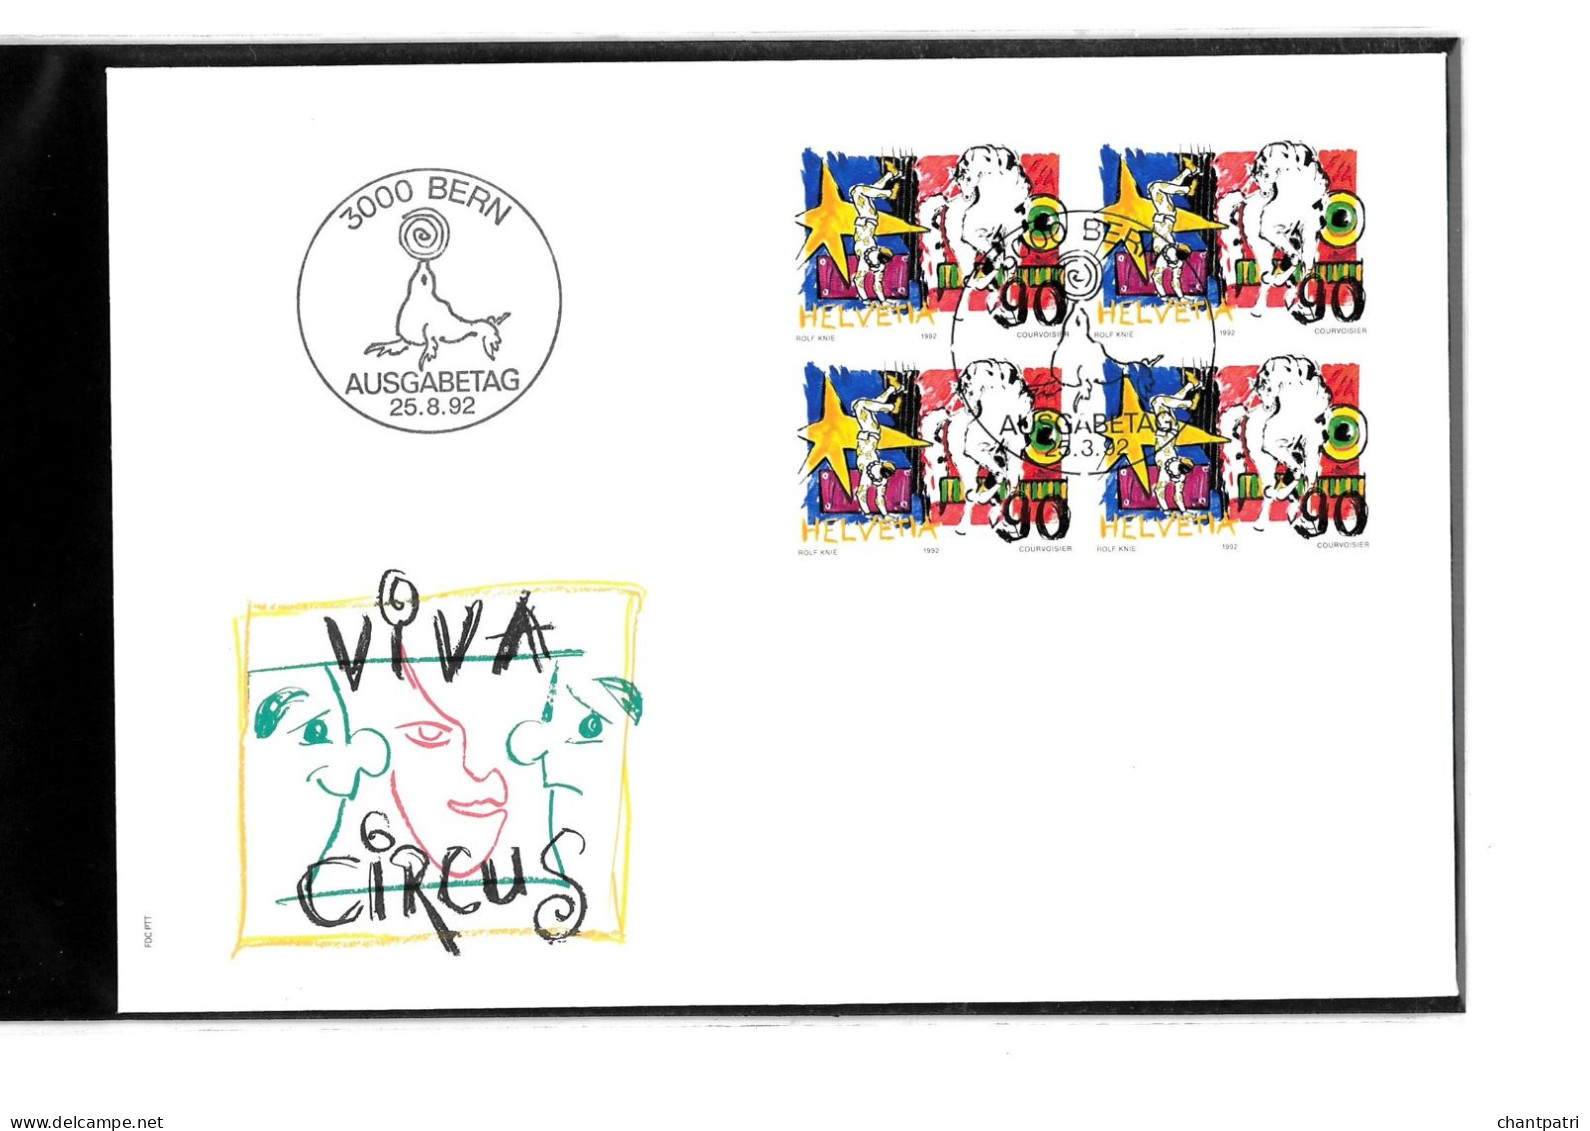 3000 Bern - Viva Circus - Ausgabetag - 25 08 1992 - Beli FDC 019 - Covers & Documents